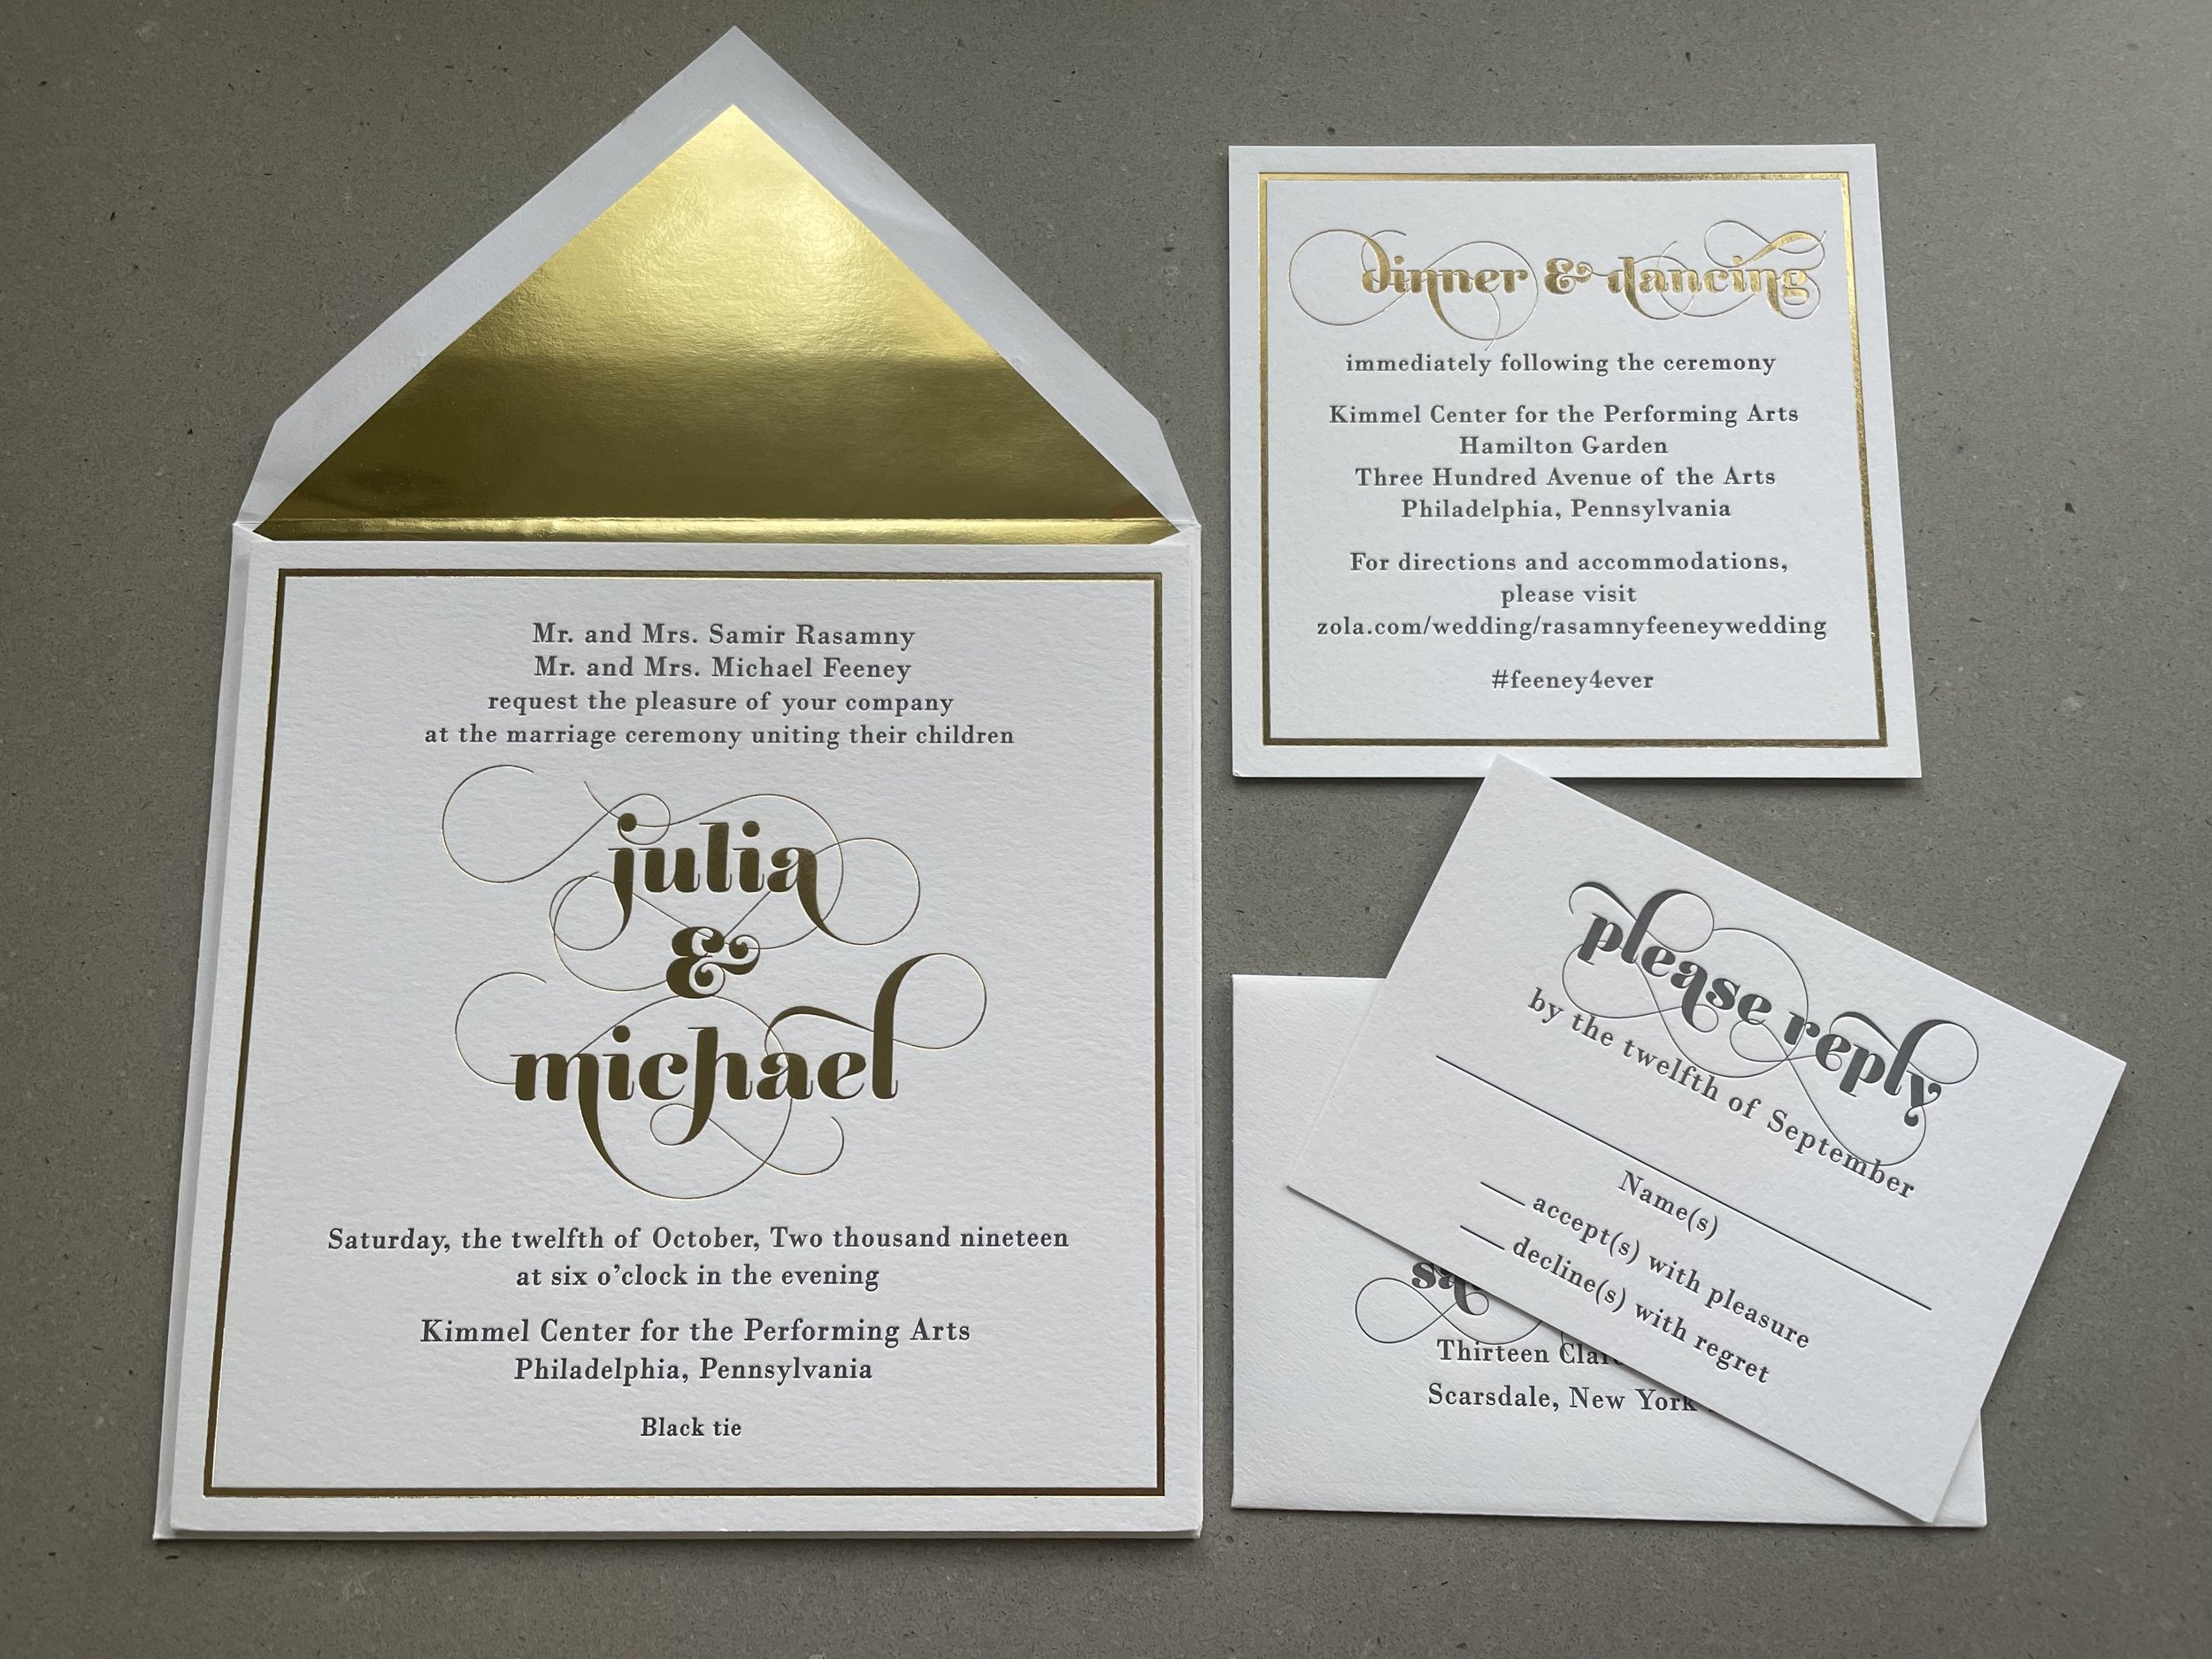 Julia and Michael's Wedding Invitation